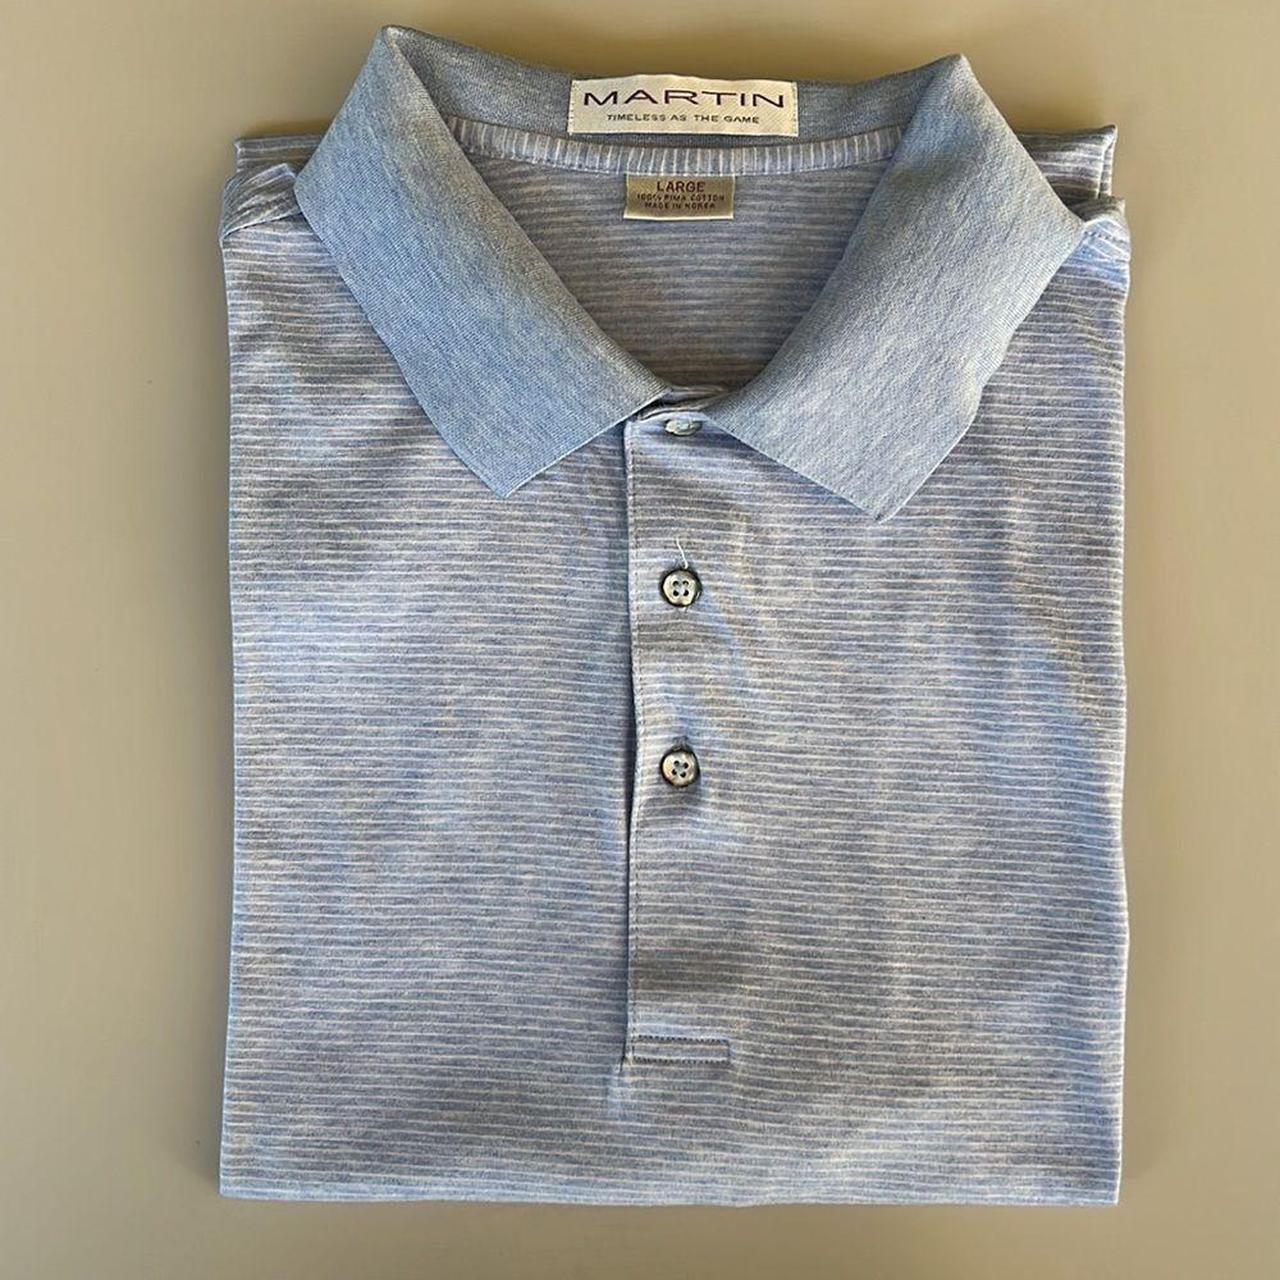 Martin 100% Pima Cotton Golf Polo Shirt size... - Depop